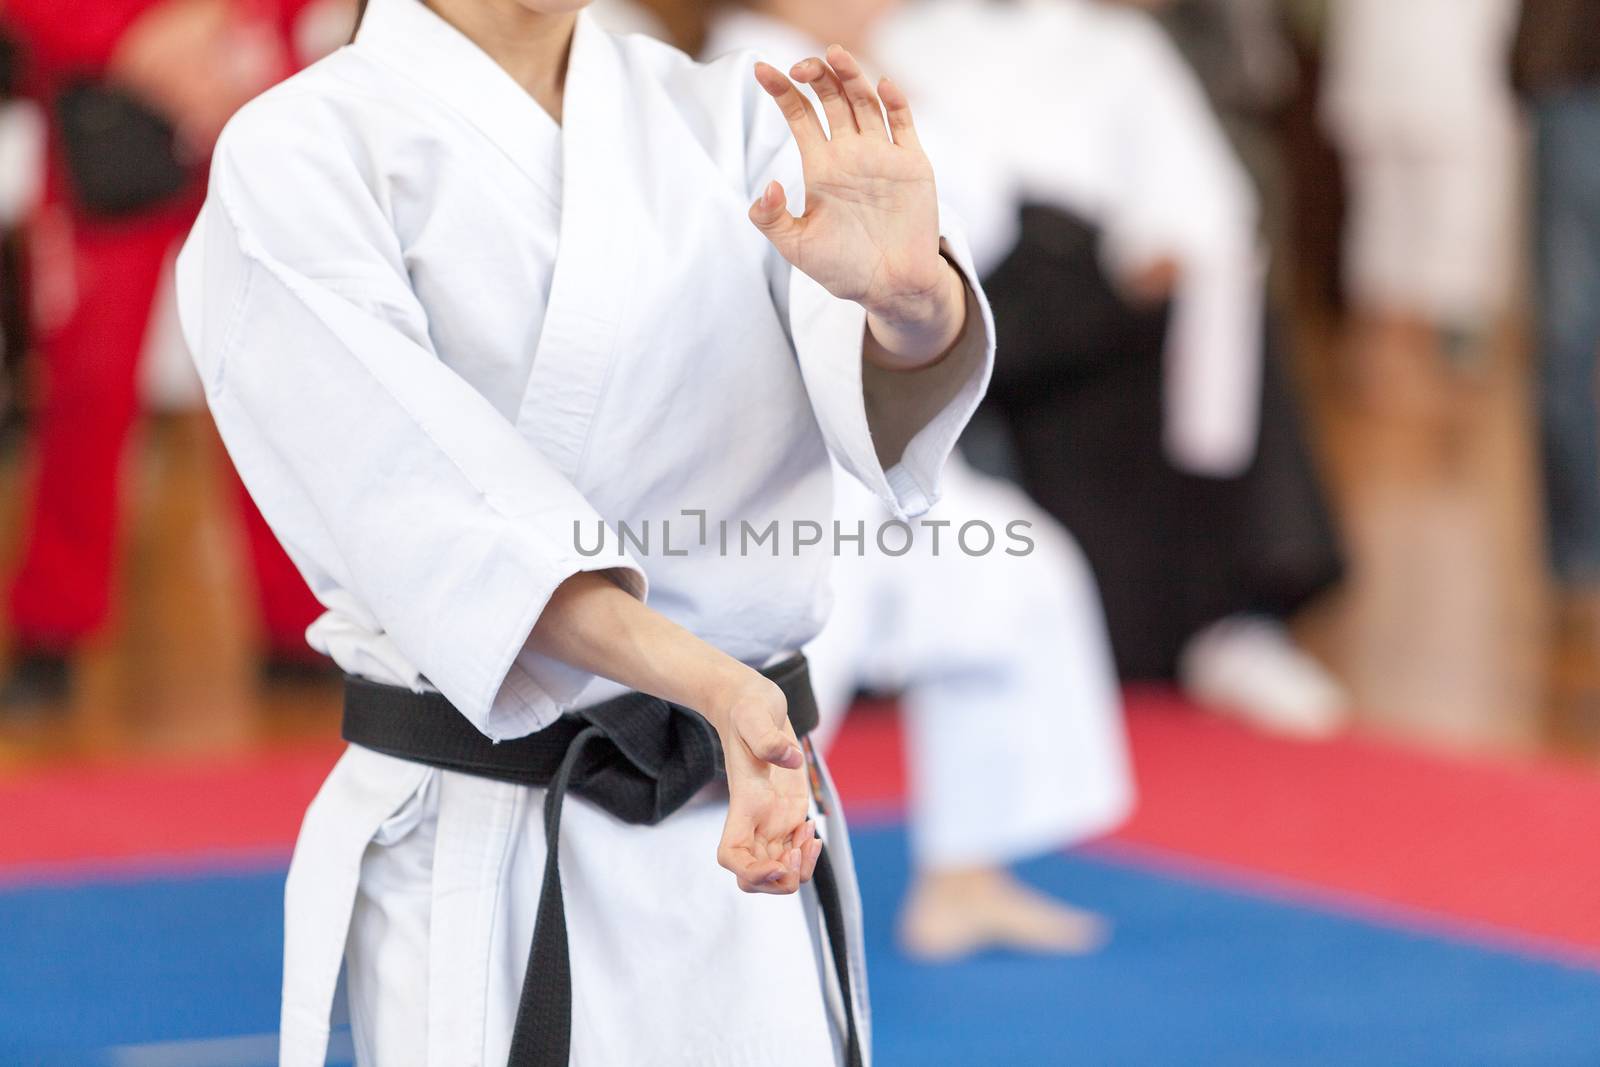 Karate training